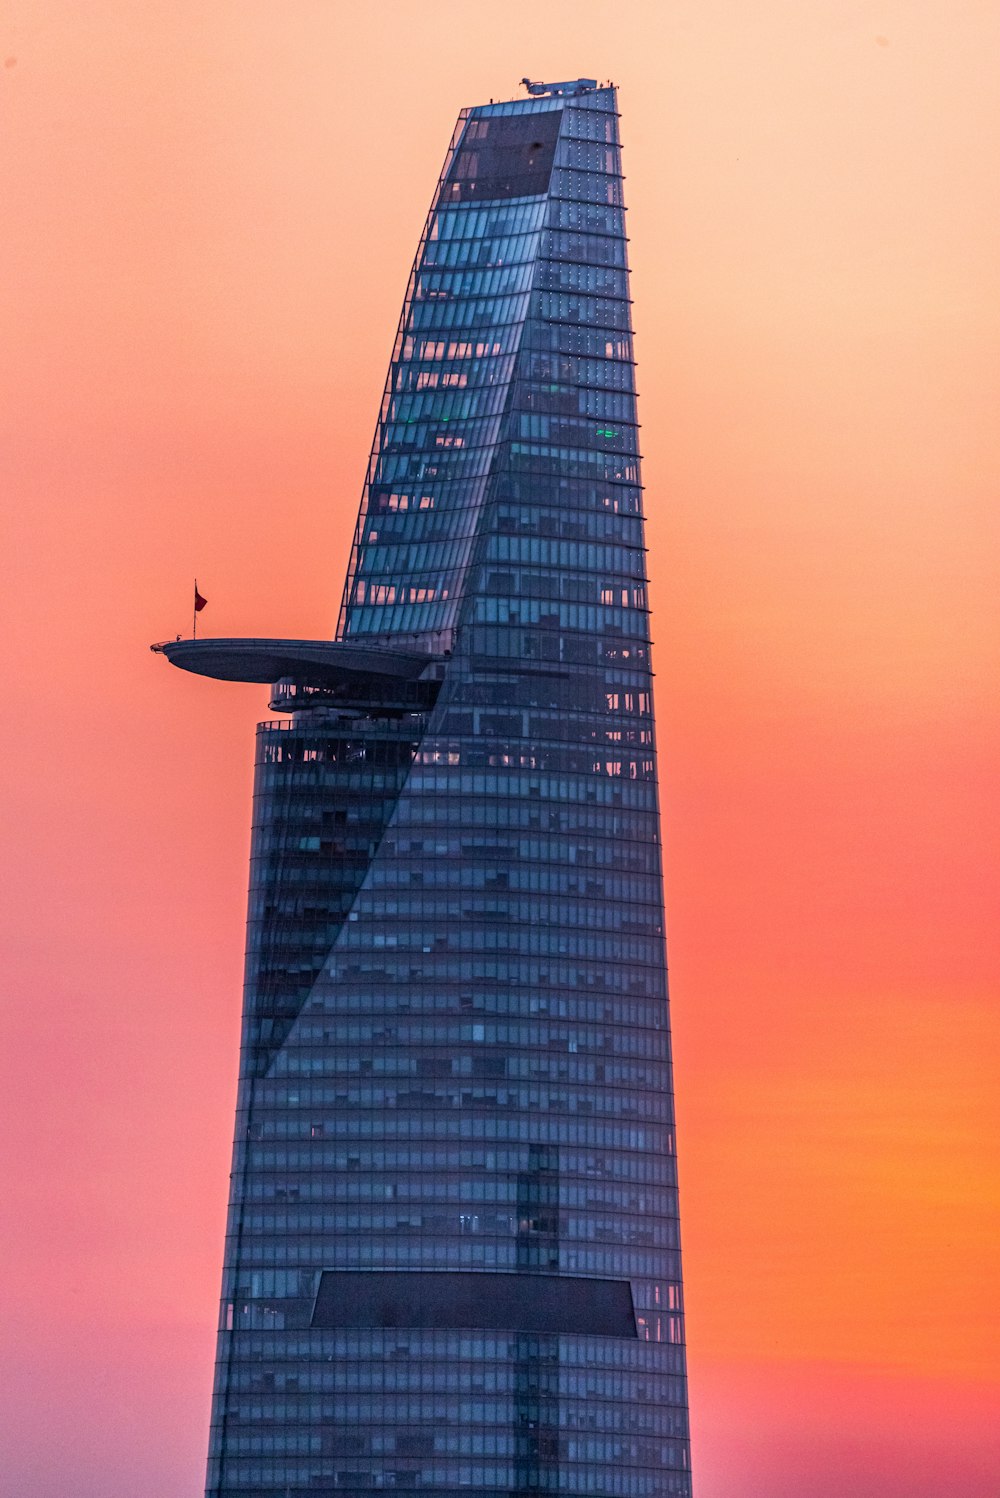 black high rise building under blue sky during daytime